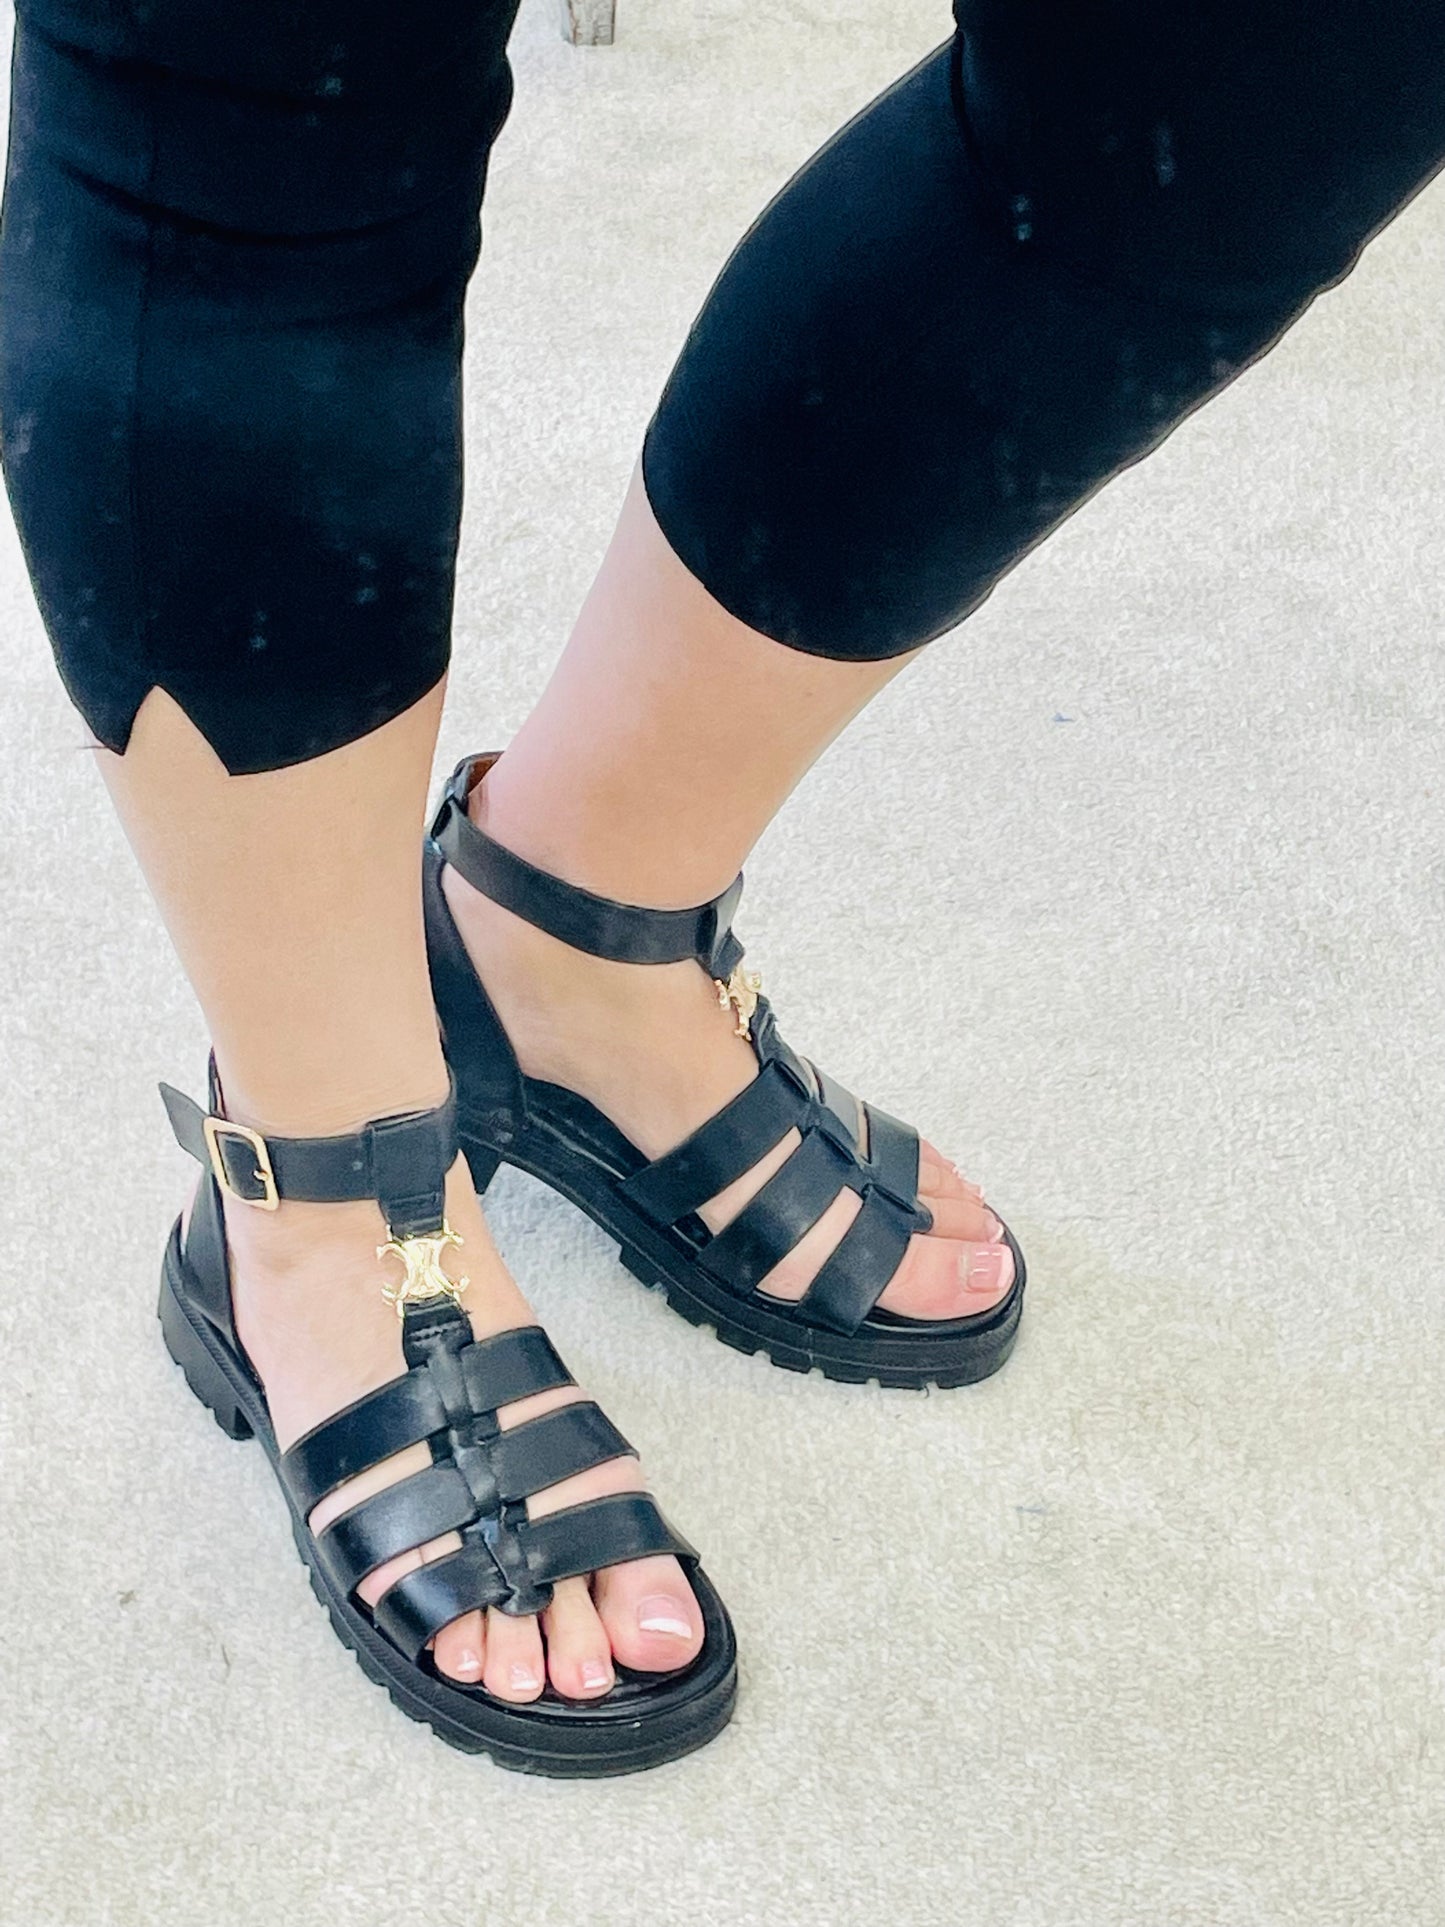 The ELENA strappy flat black sandals